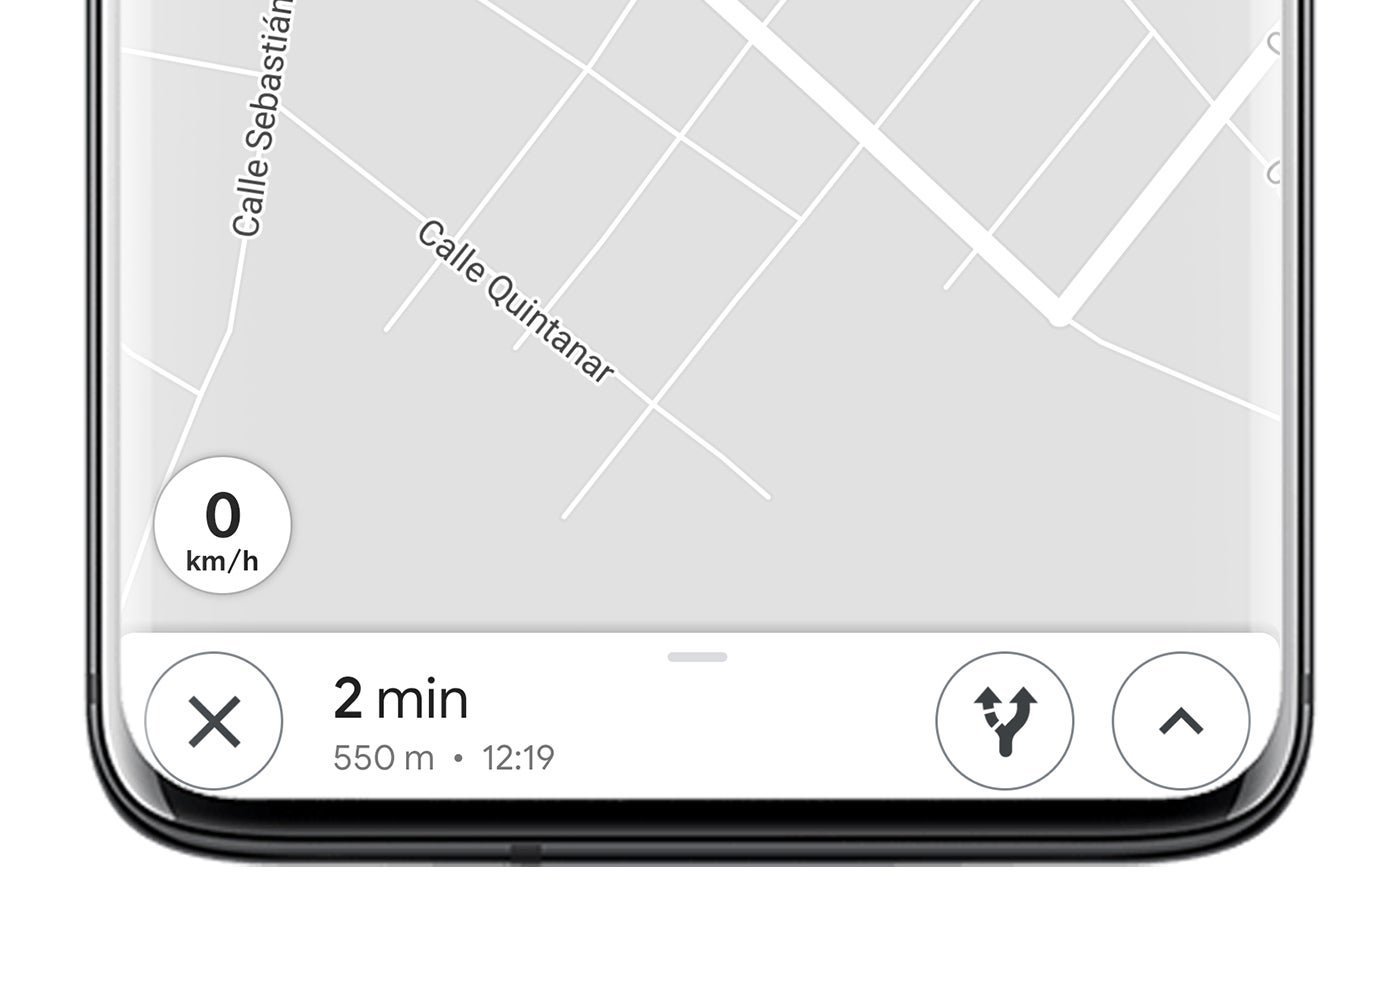 Velocimetro de Google Maps en Android